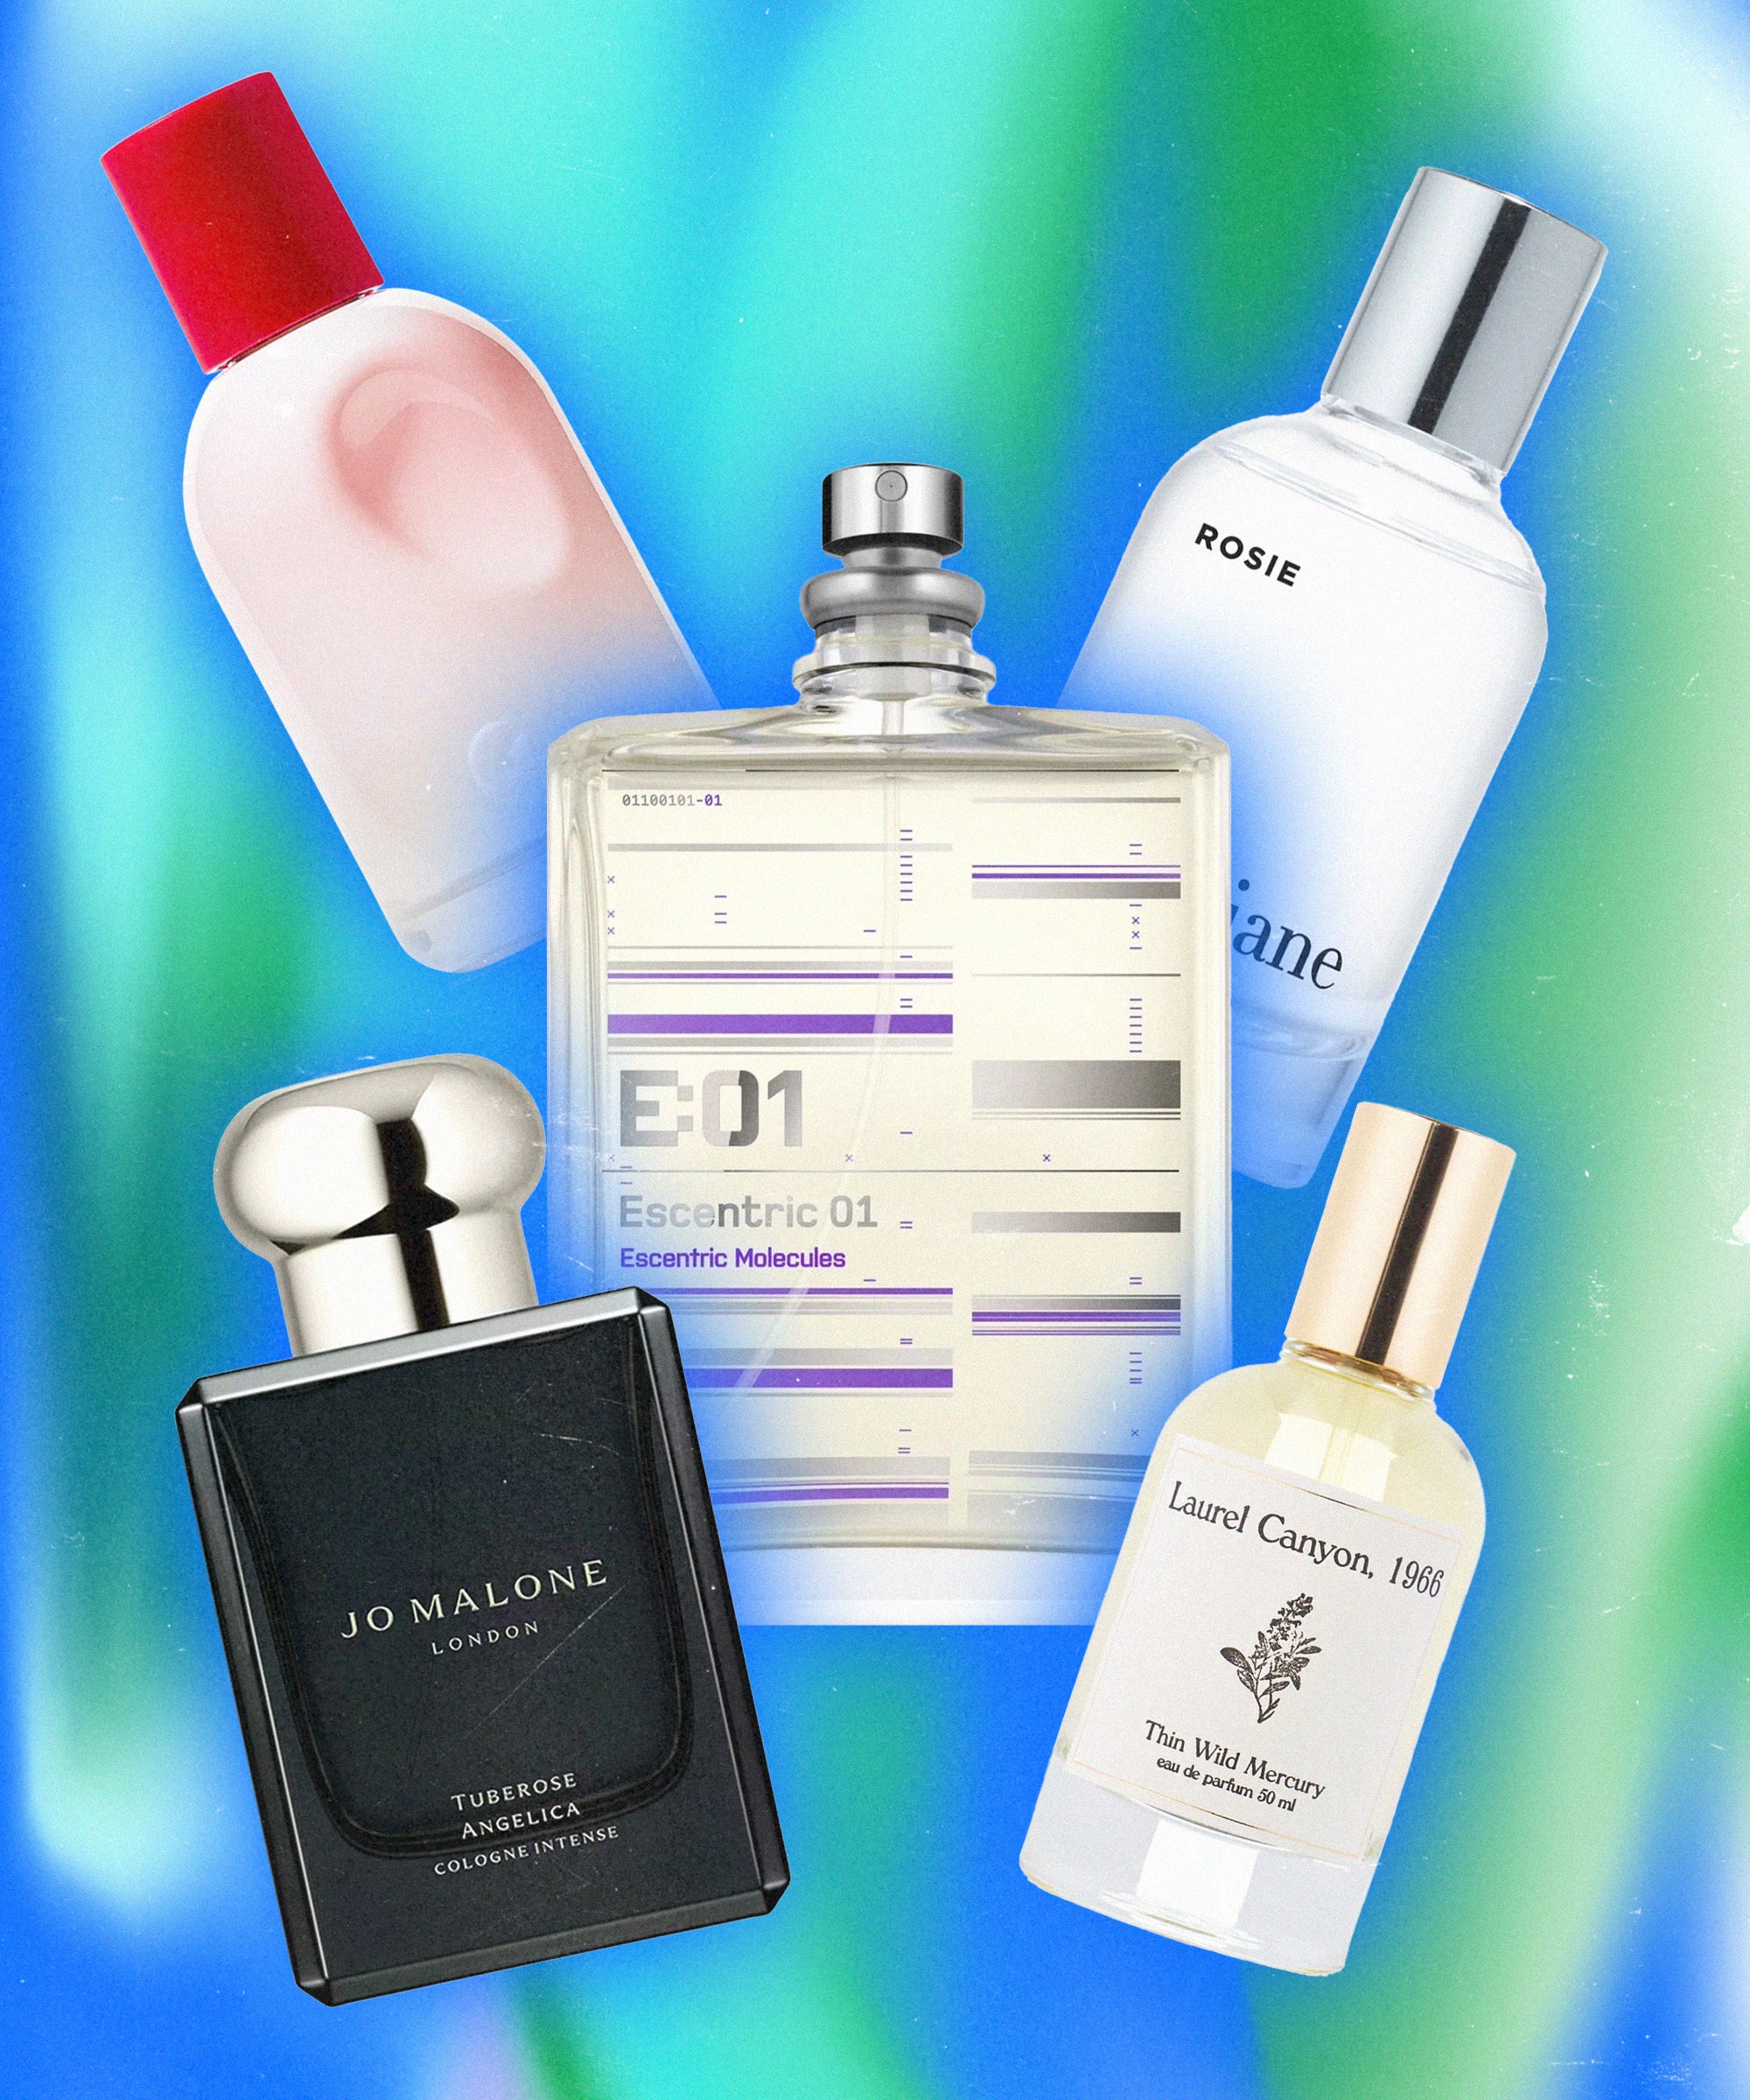 Honest Perfume Review Of All The Zara Fragrances I've Tried